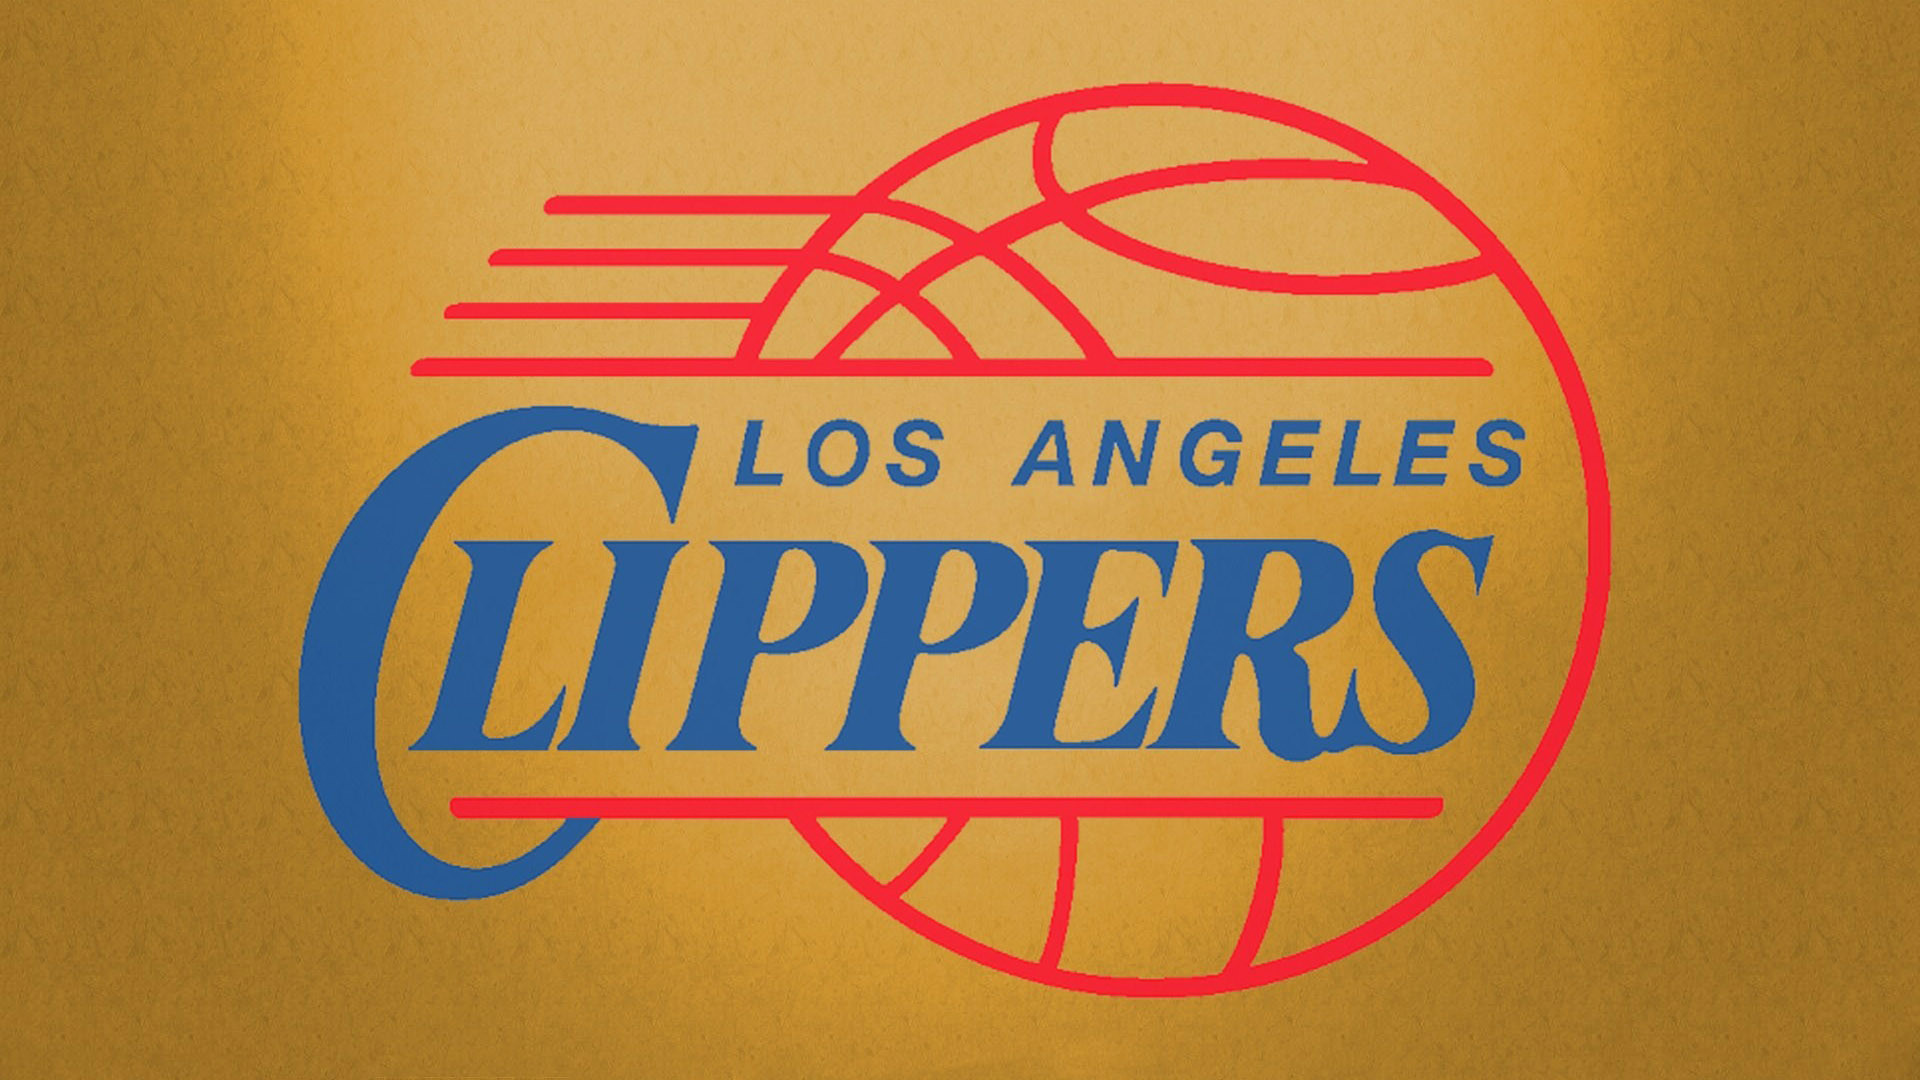 Download Fullsize Image Los Angeles Clippers Basketball Logo Wallpaper Nba 1920x1080